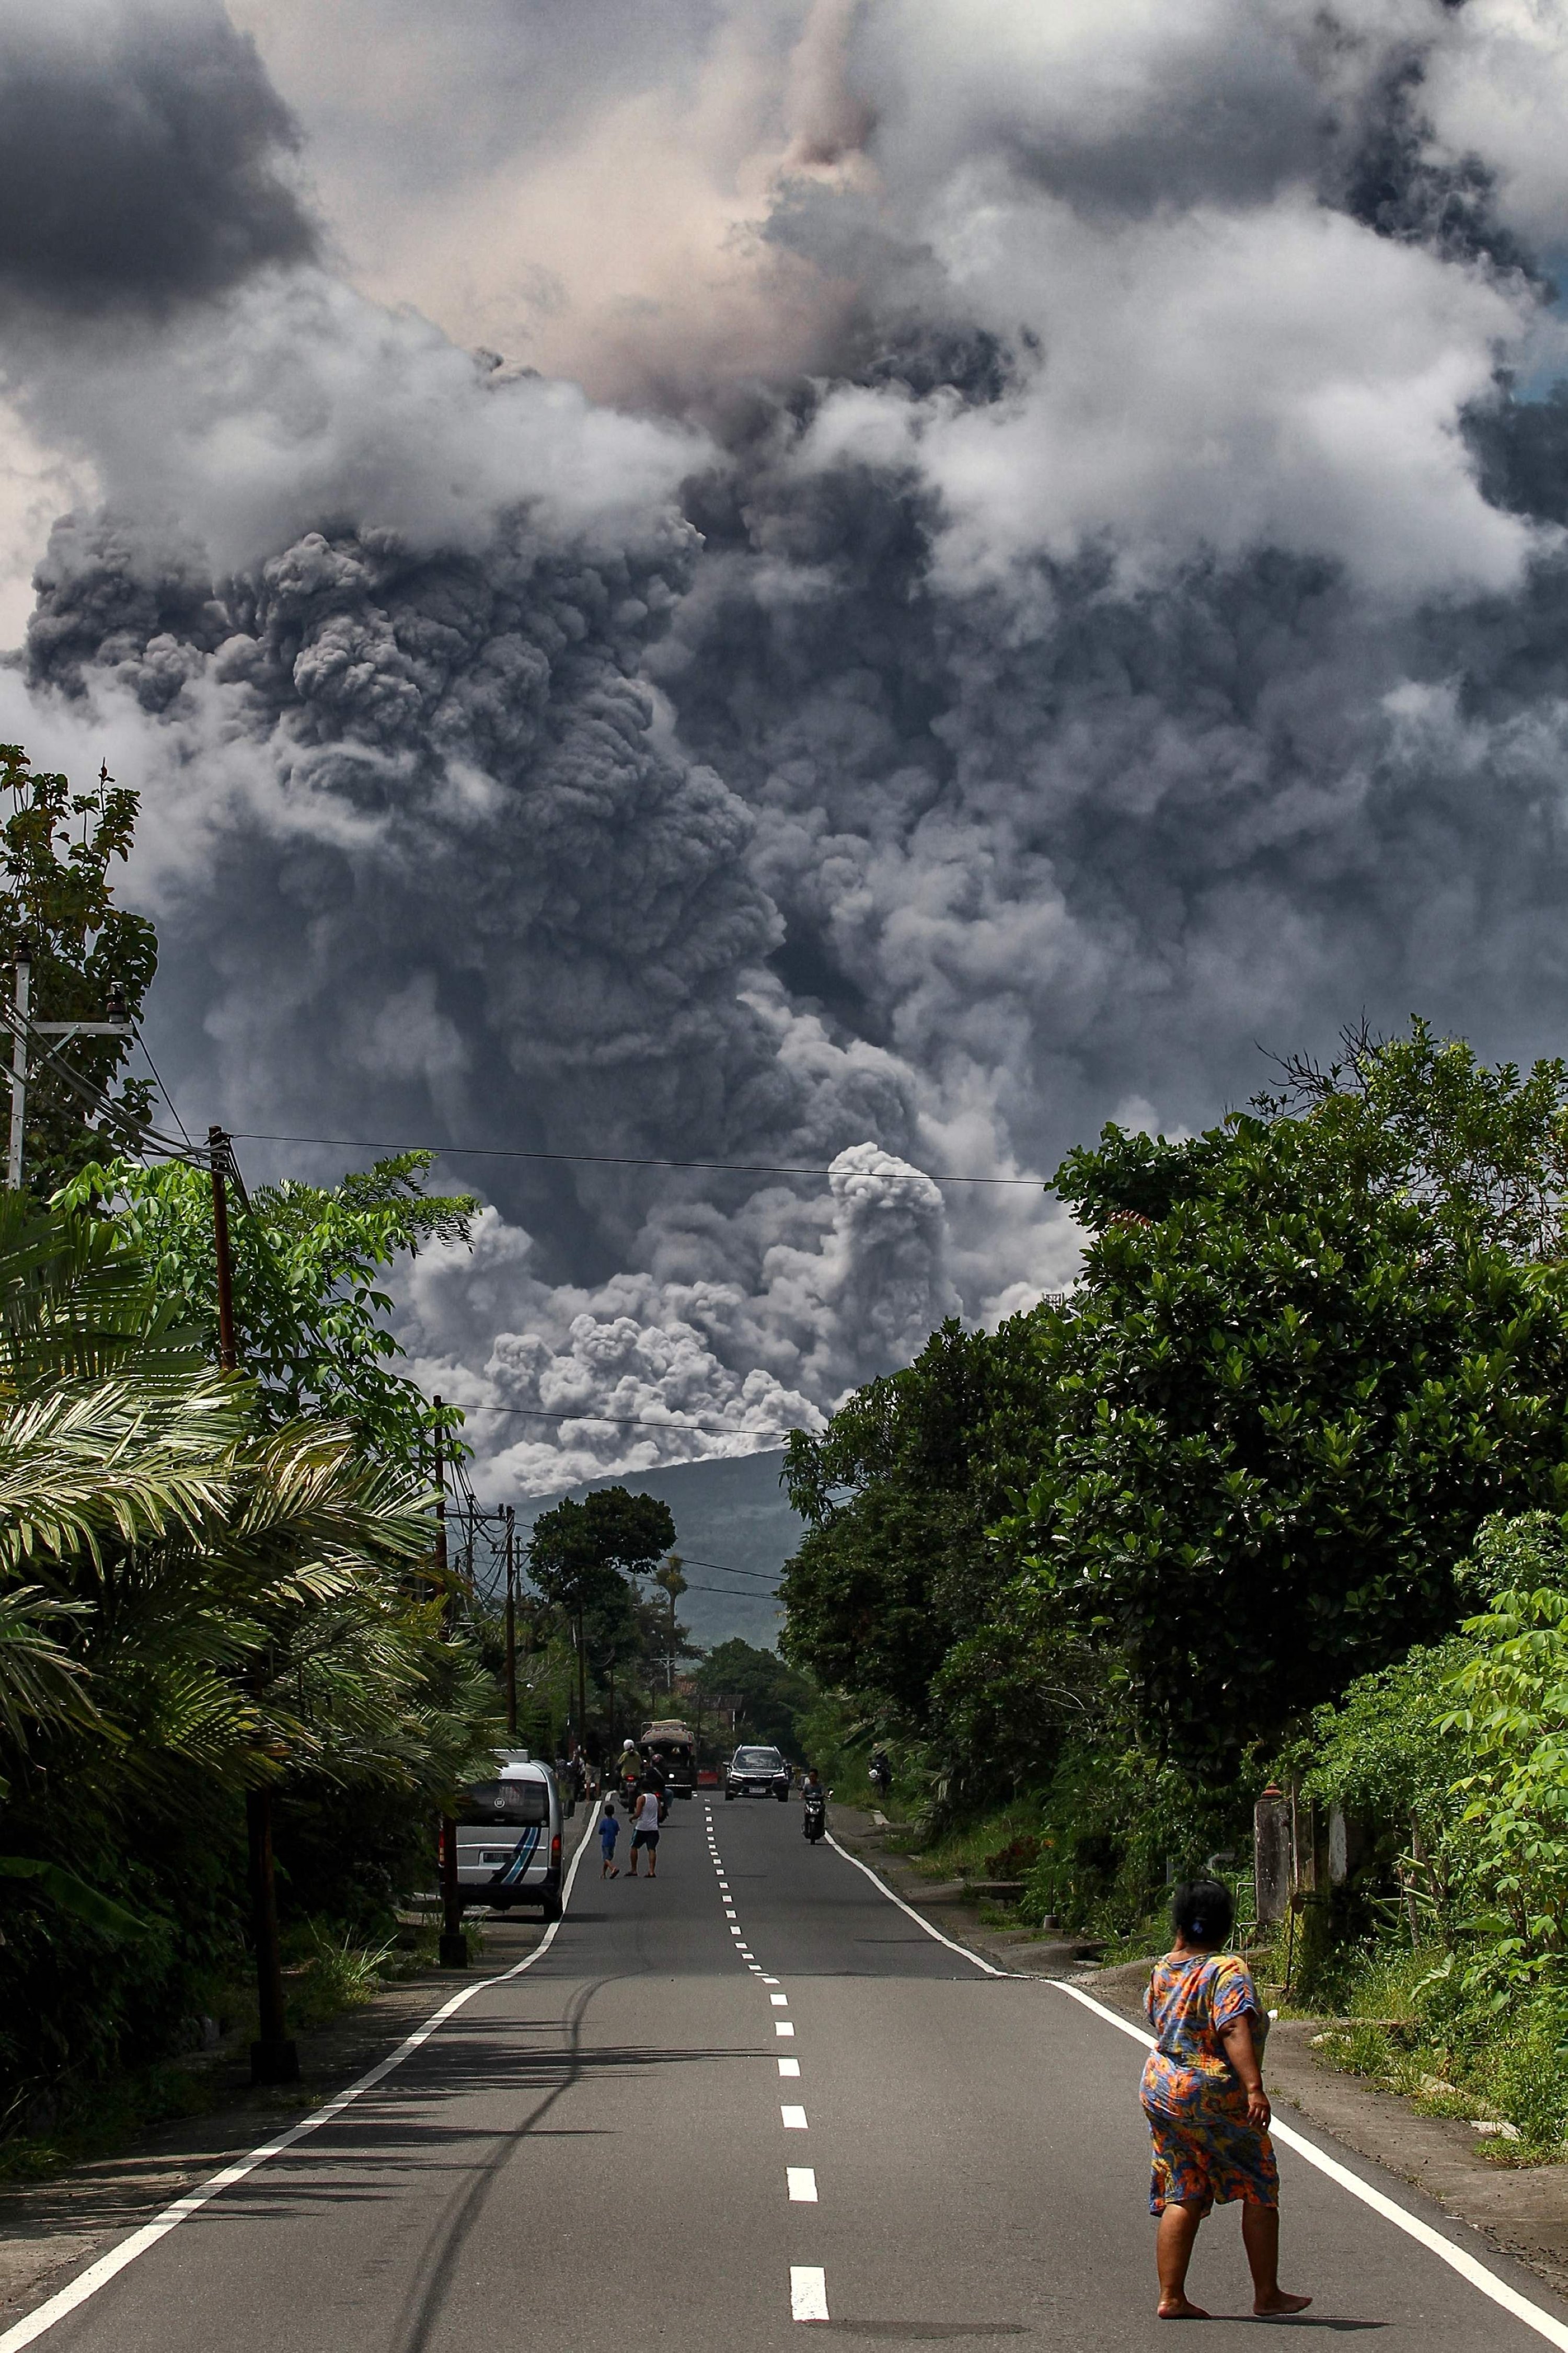 Indonesias Mount Merapi Volcano Erupts Spewing Hot Clouds Lava